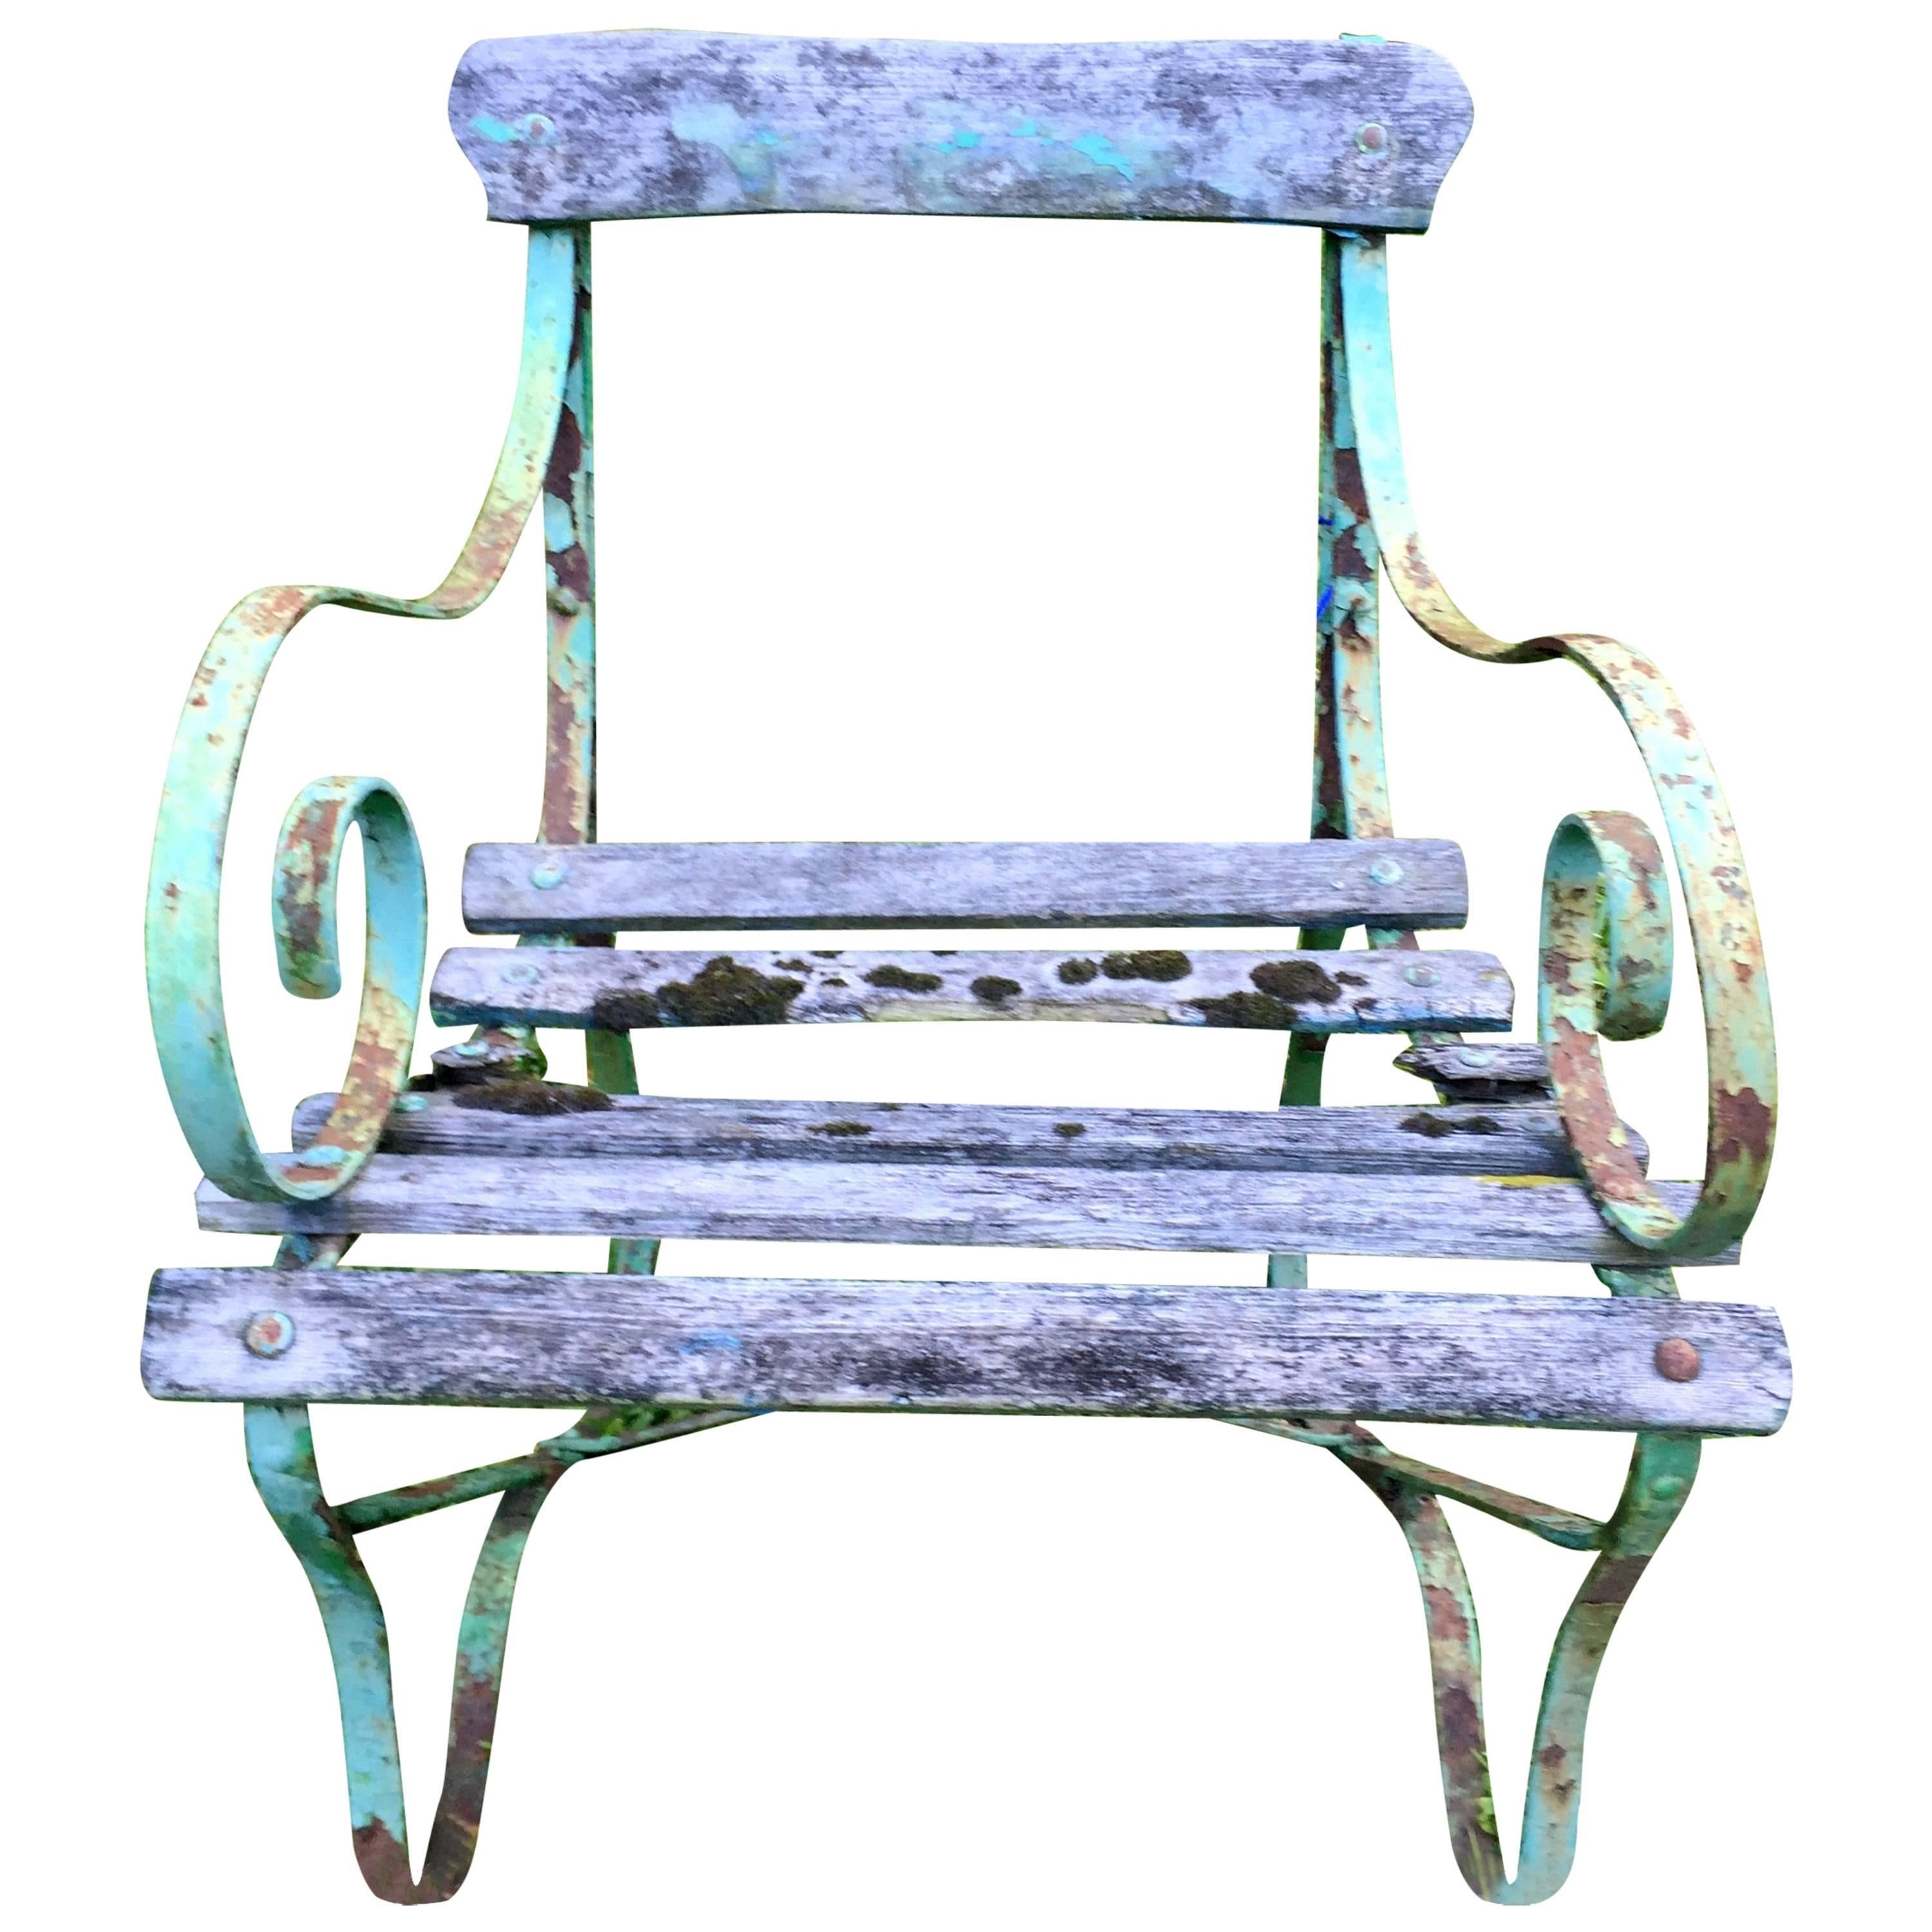 Charming Wrought Iron Garden Chair